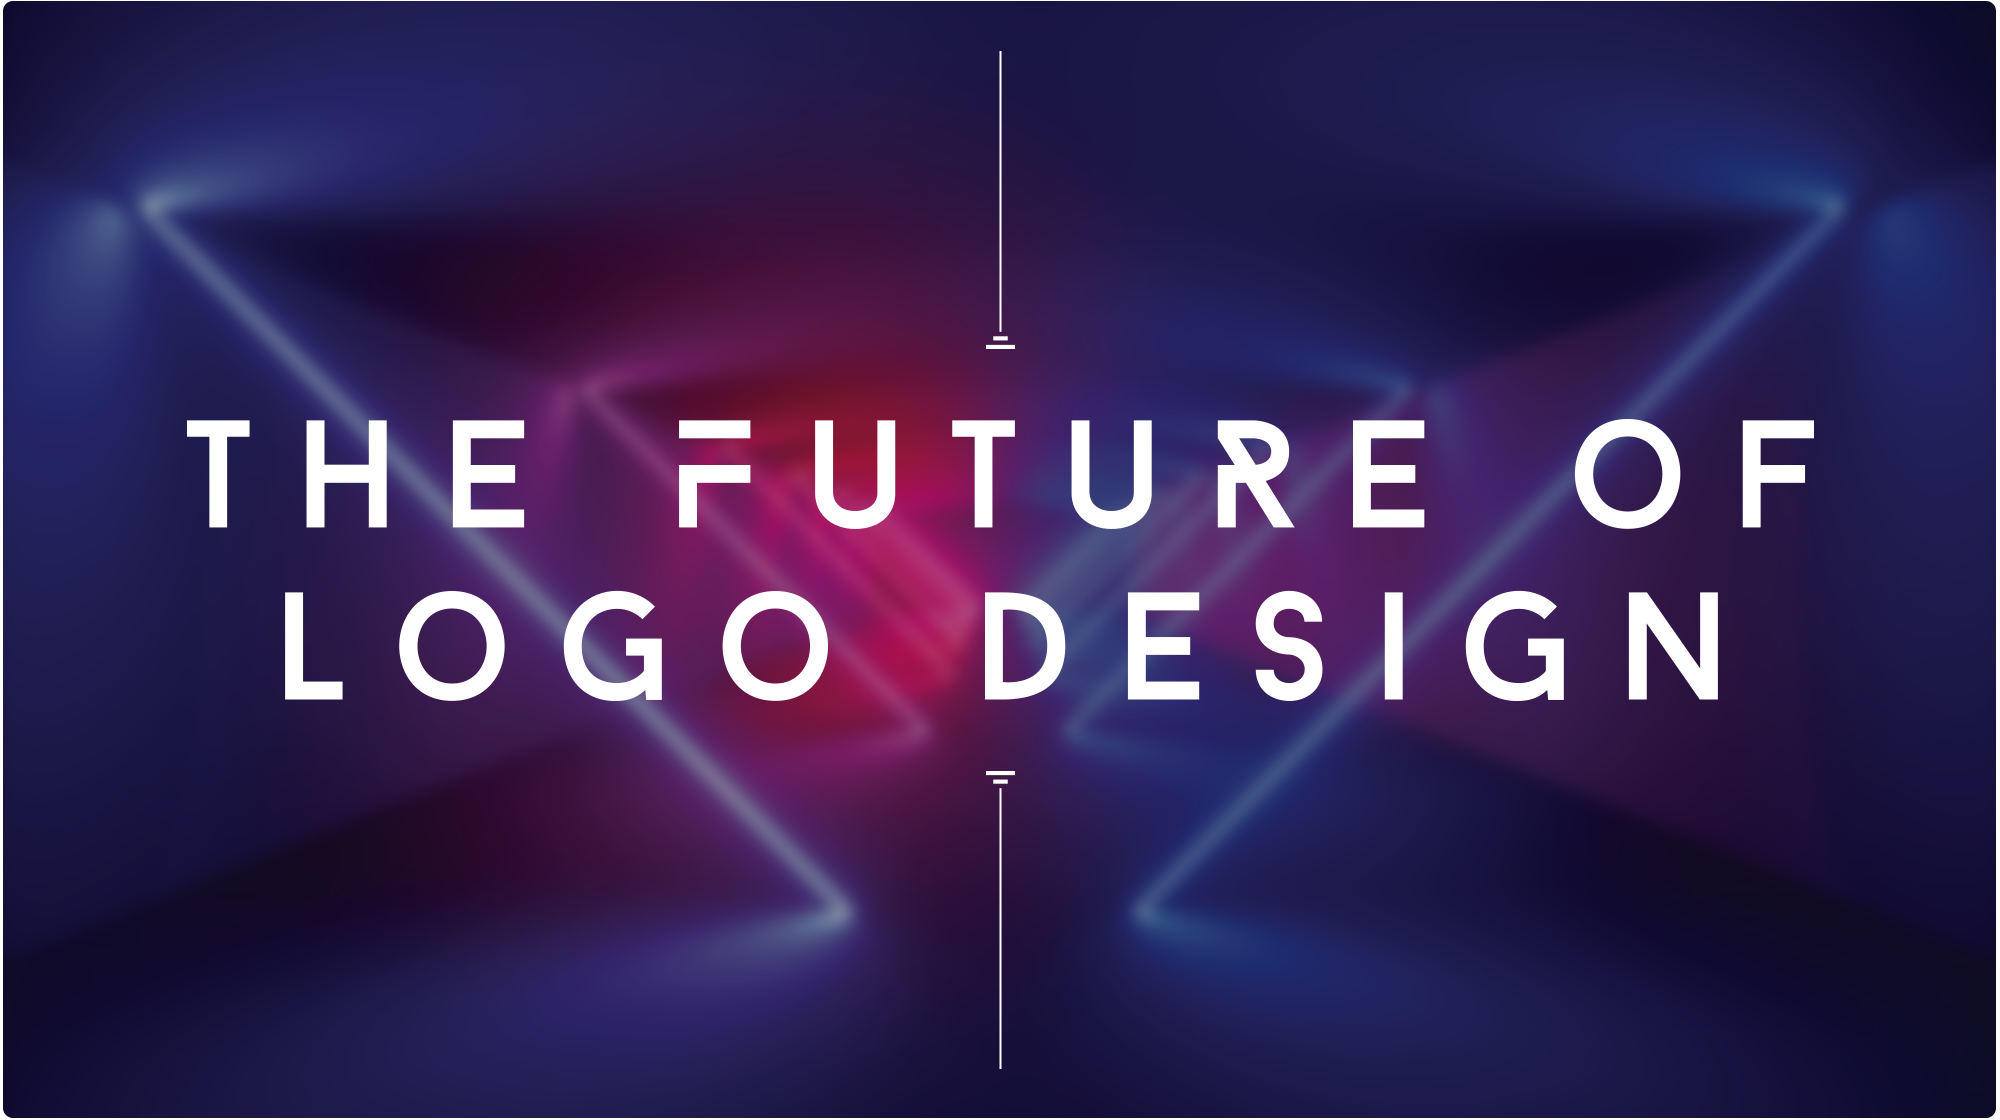 Responsive Logos - the future of logo design